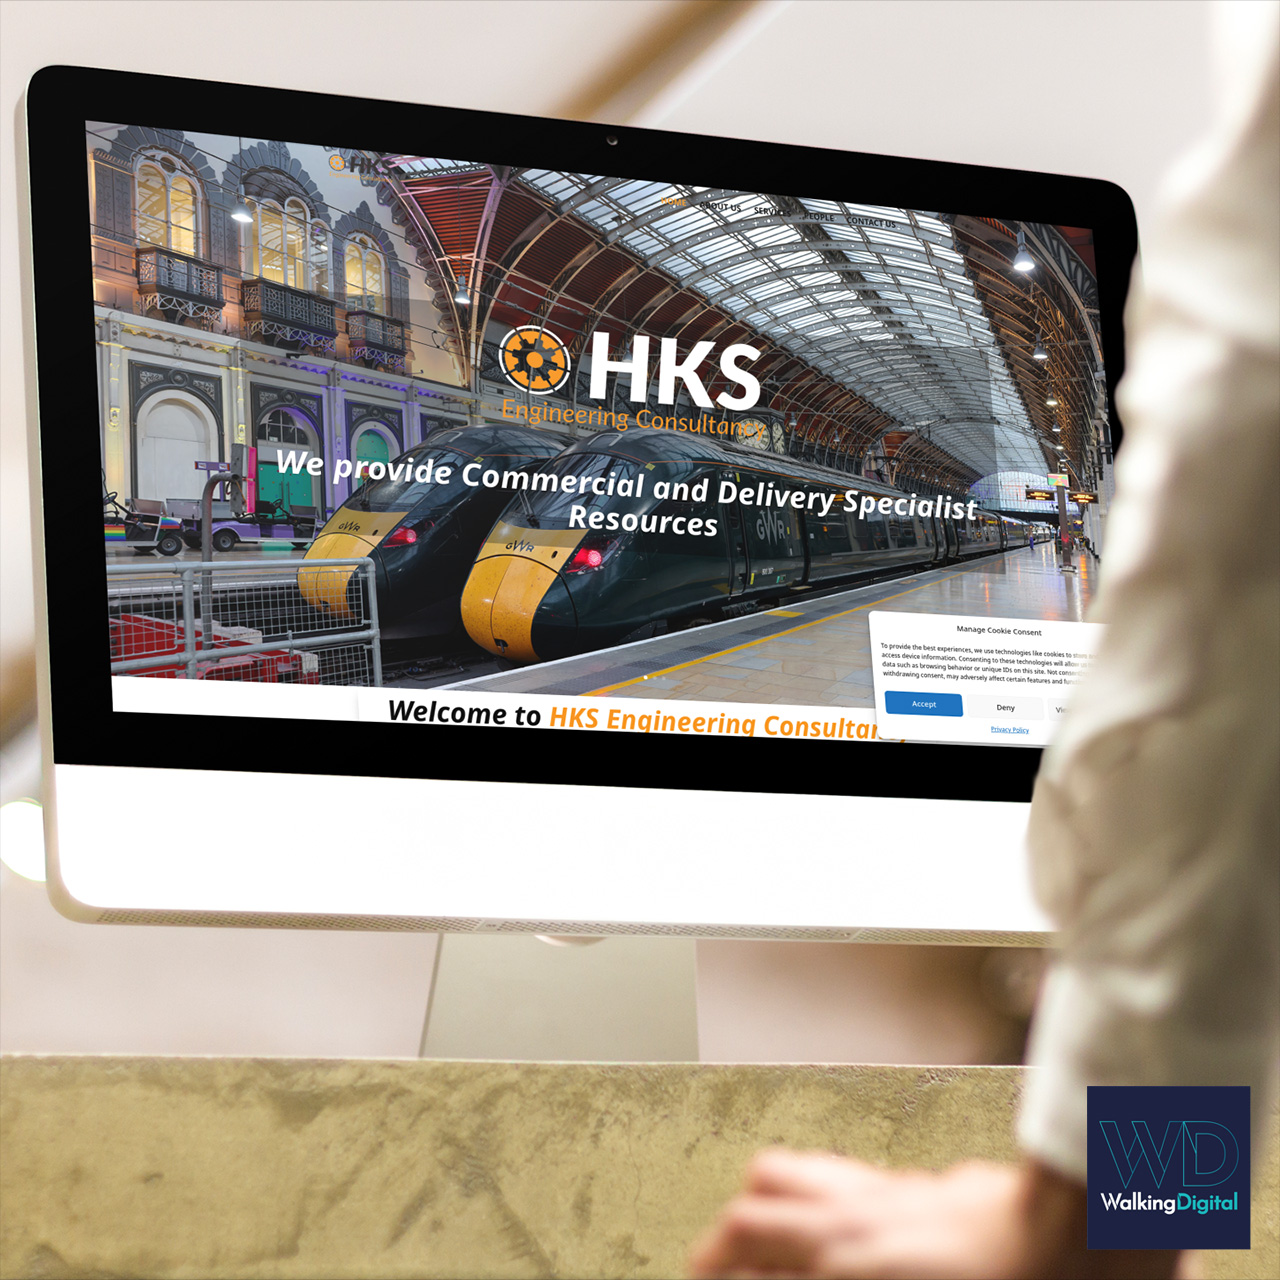 HKS Engineering Consultancy website on an iMac